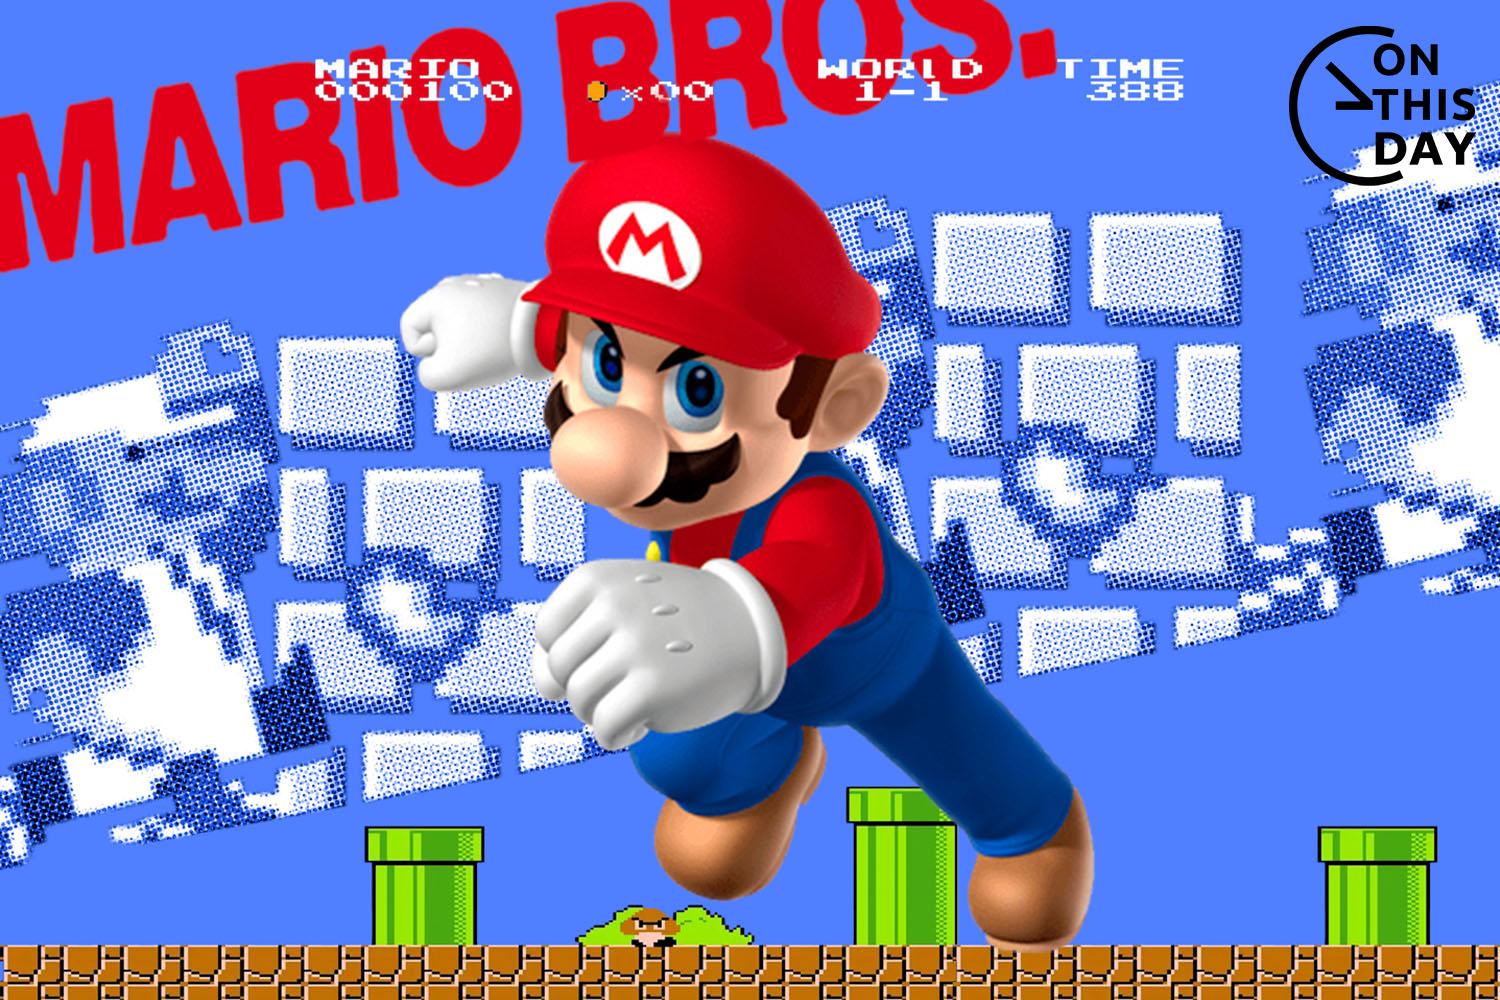 On-This-Day-Super-Mario-38-Years-SPACEBAR-Hero